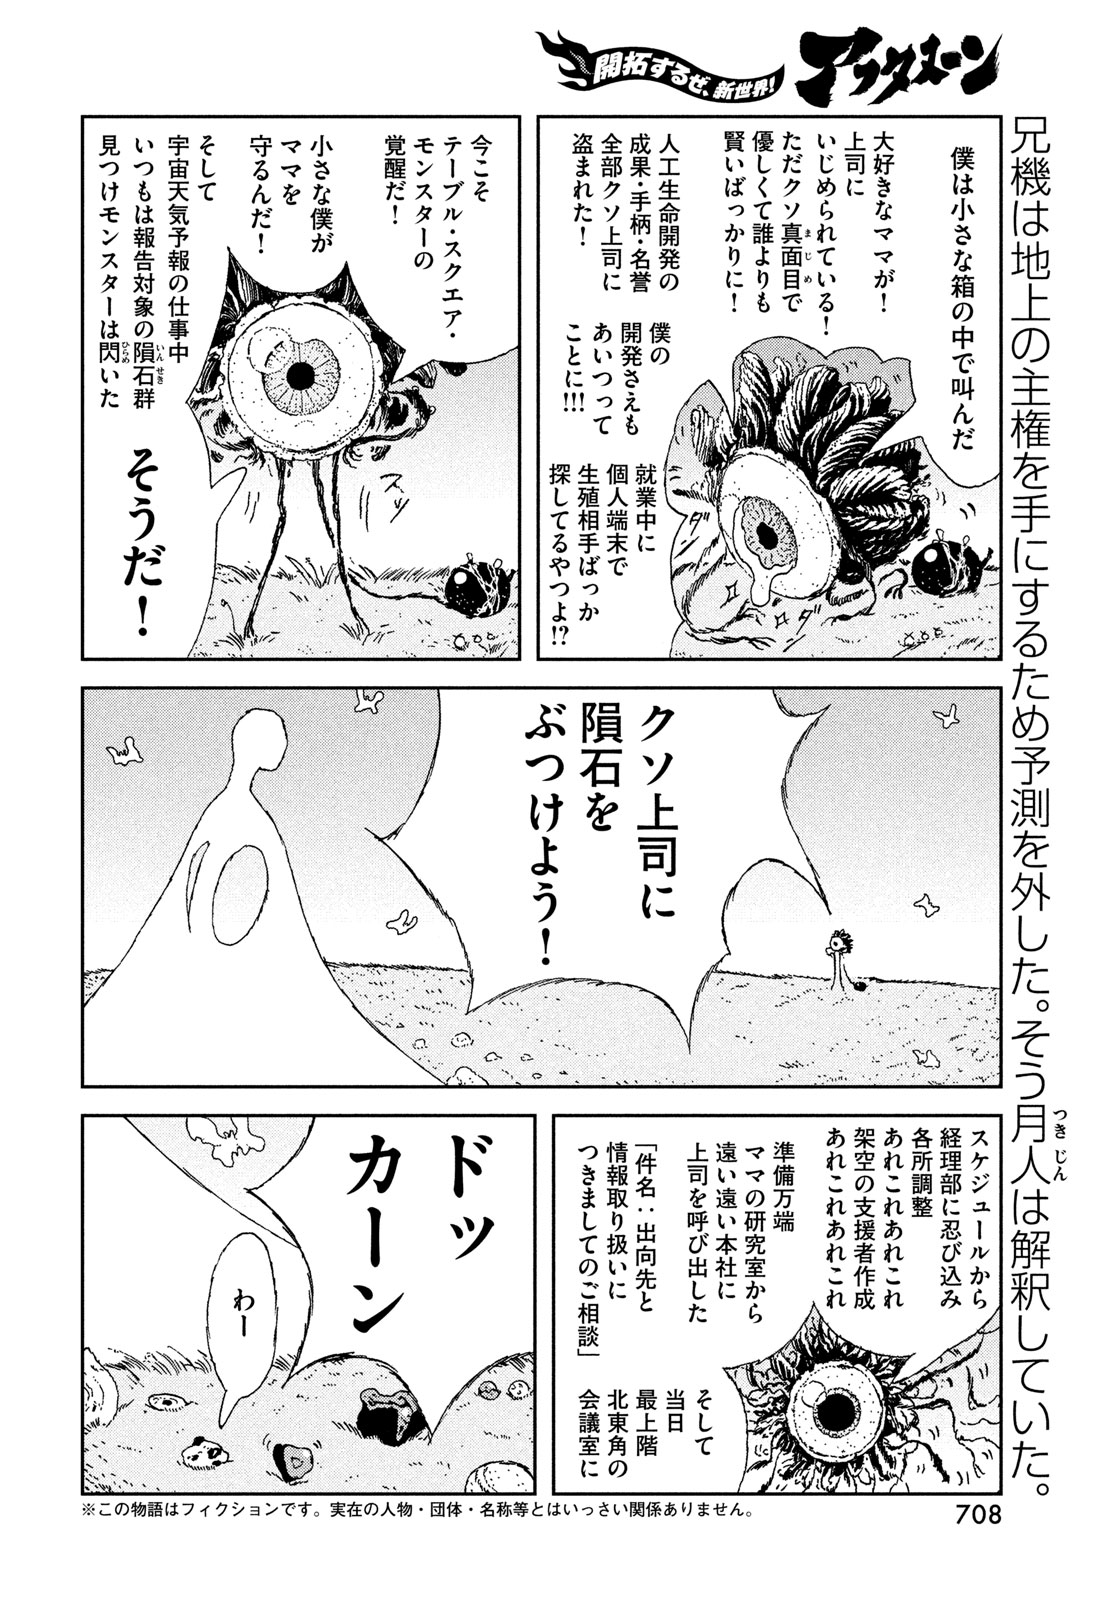 Houseki no Kuni - Chapter 104 - Page 2